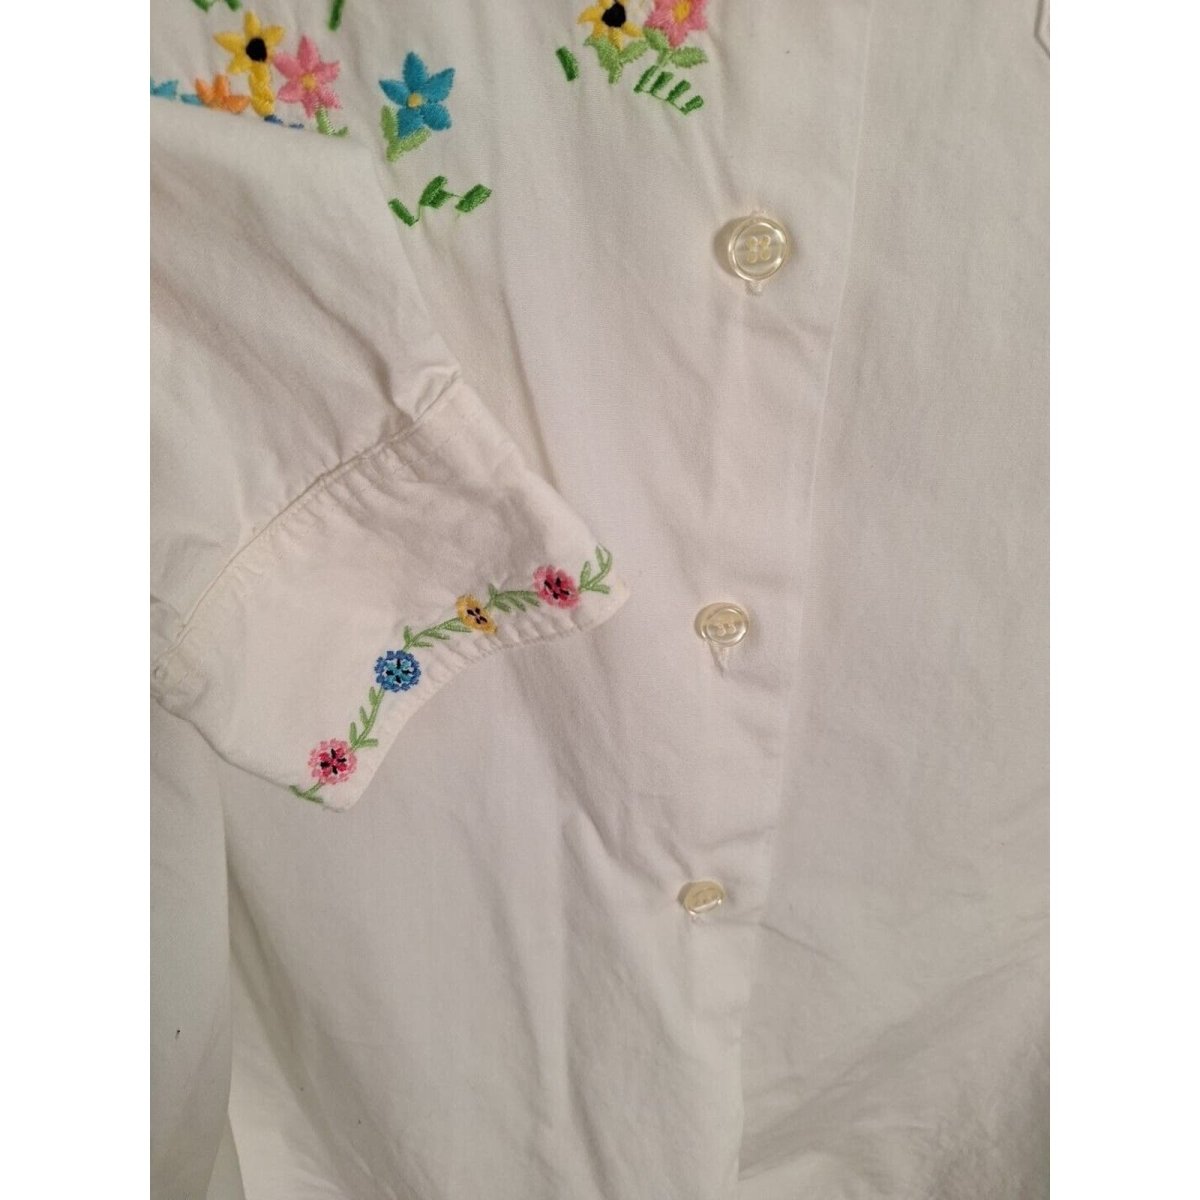 Vintage 80s/90s White Floral Garden Button Up Shirt Women Size 14 L/XL - themallvintage The Mall Vintage